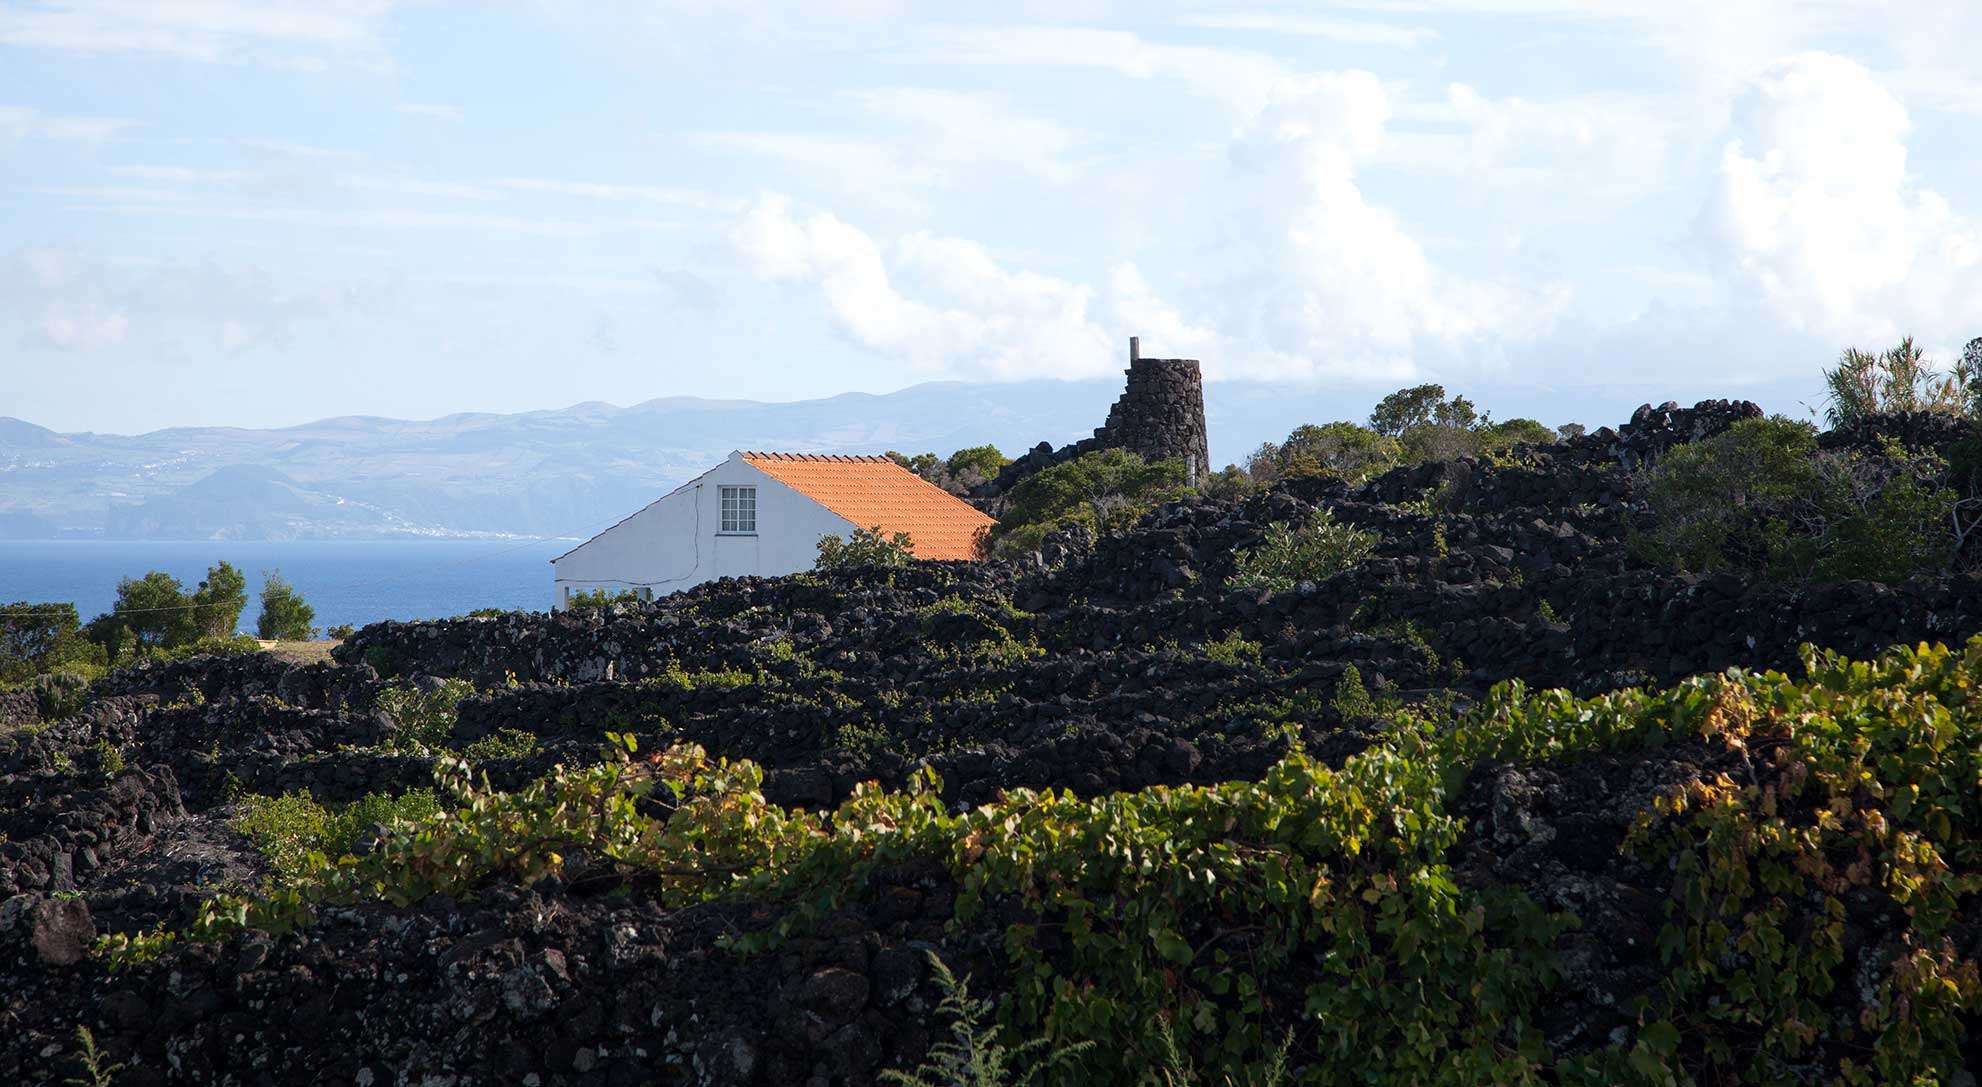 Lajido Vineyards trail in Pico island